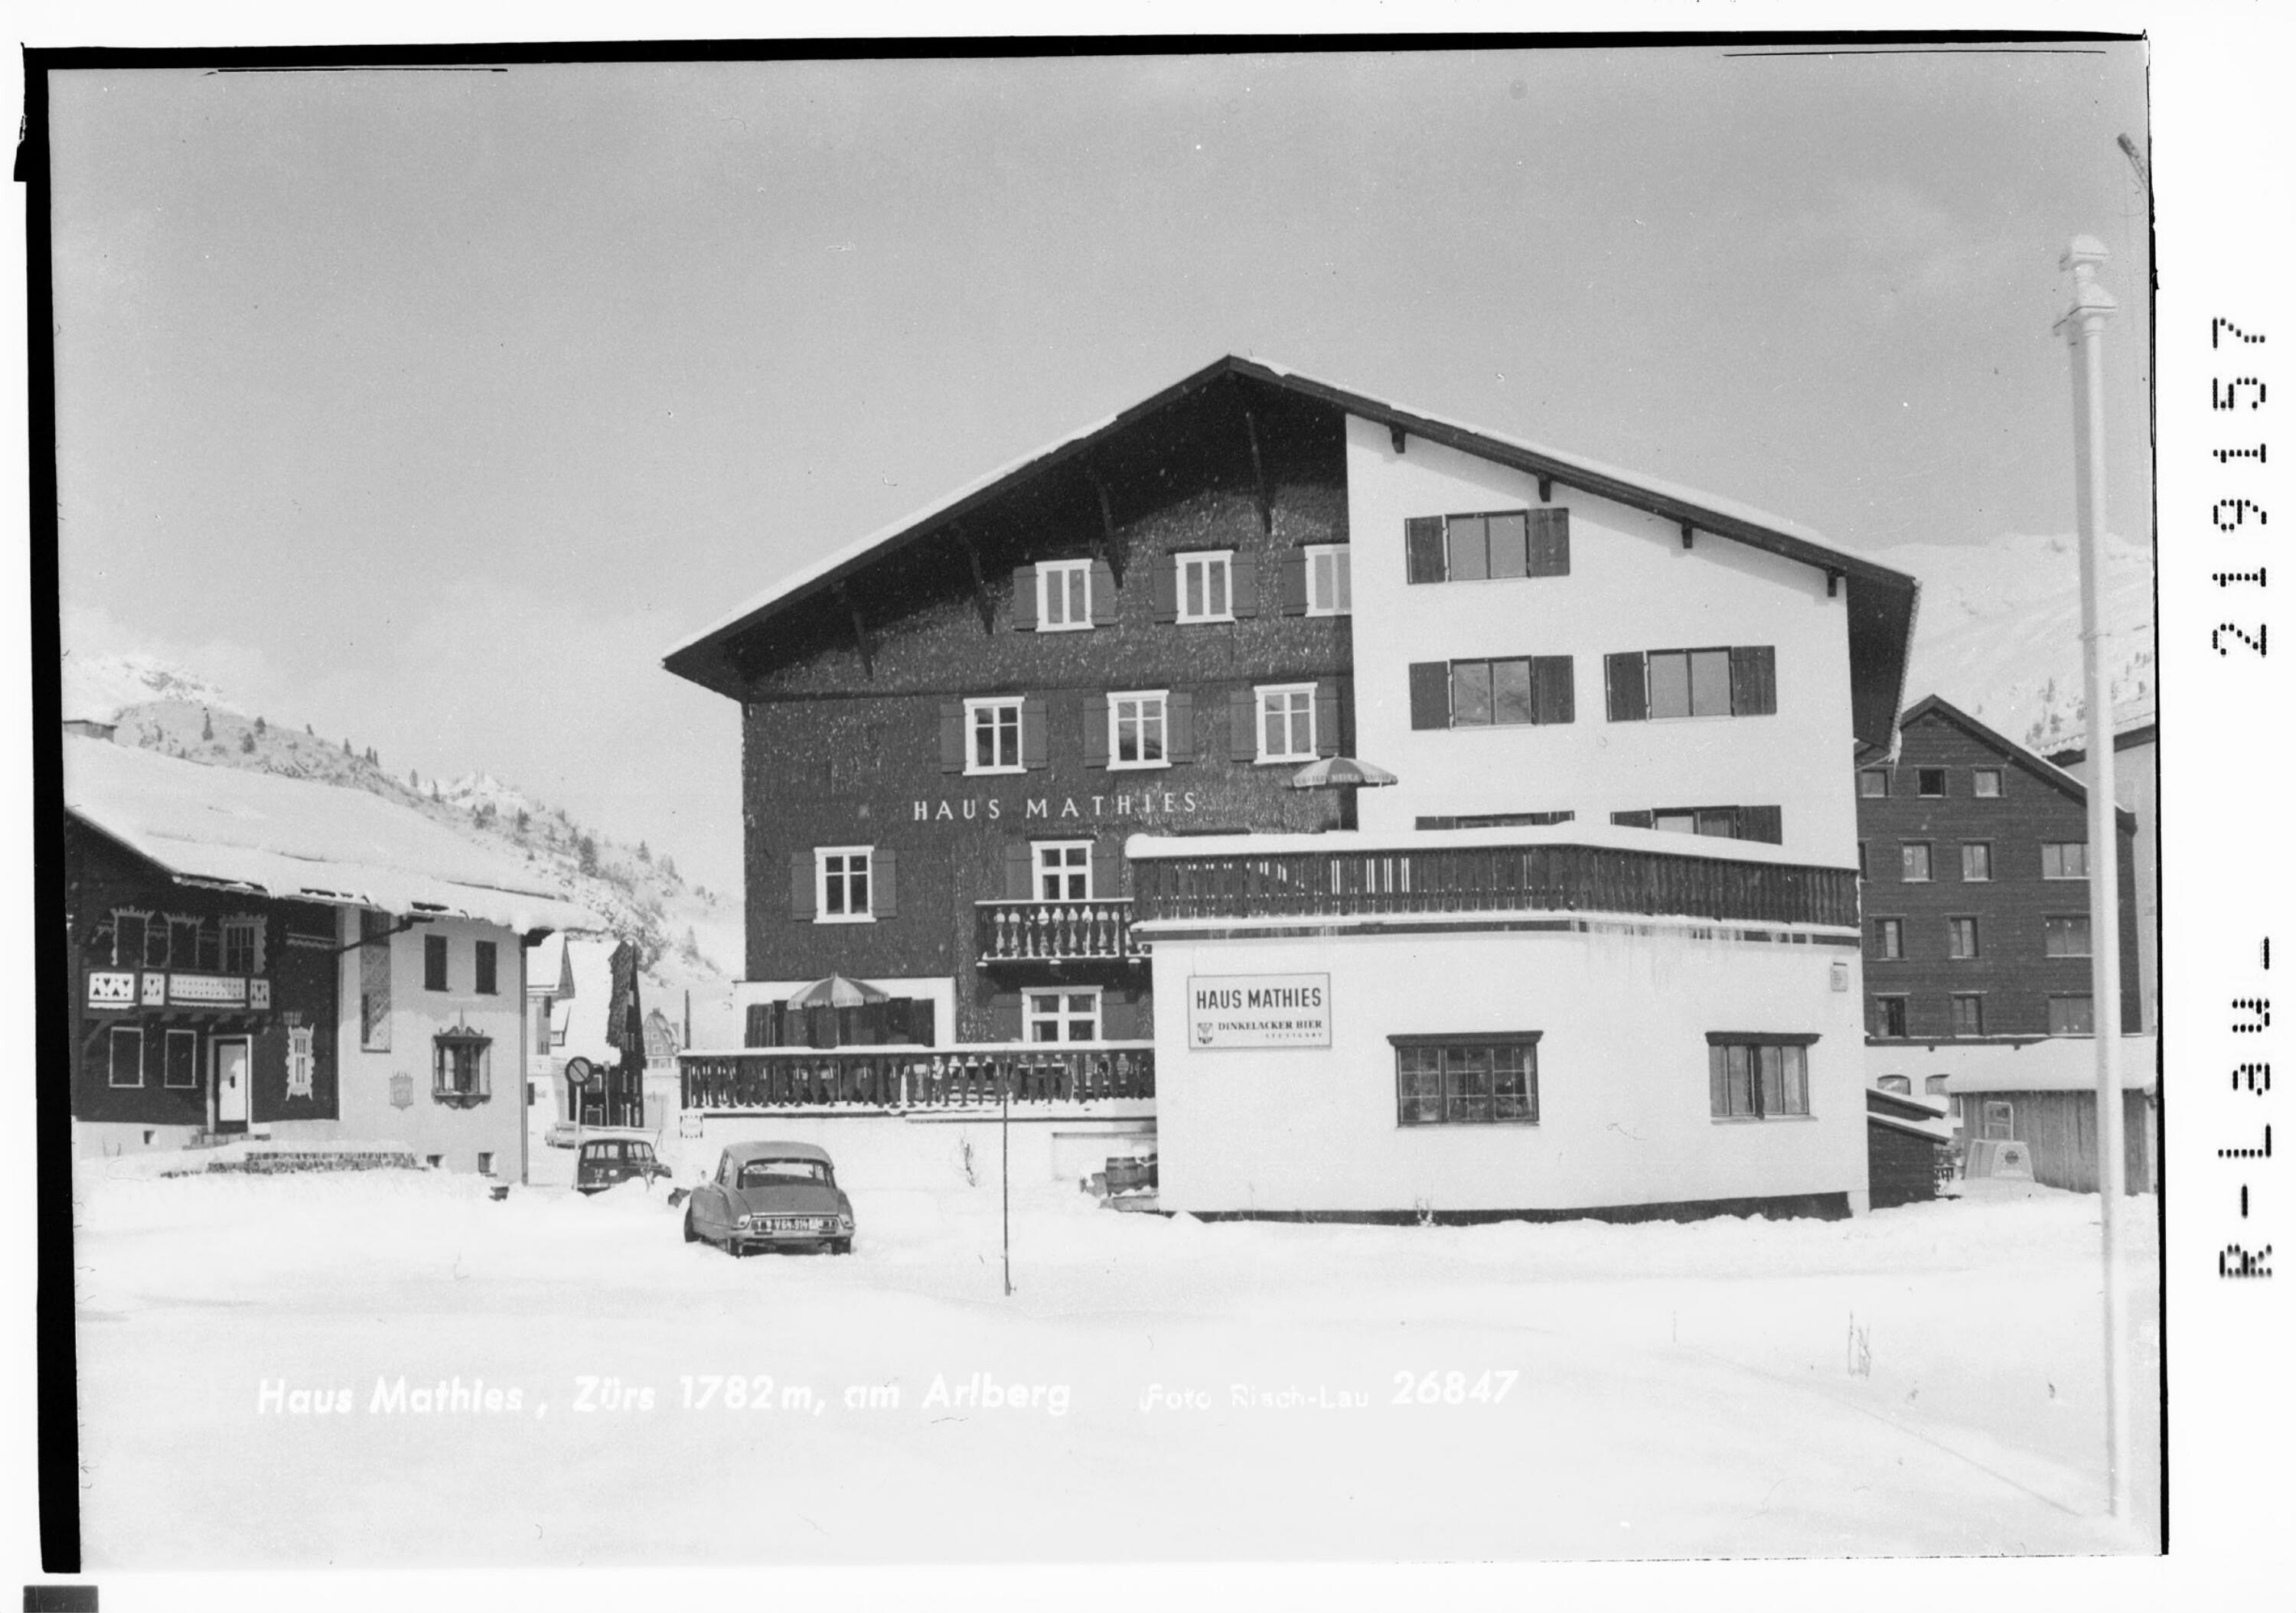 Haus Mathies in Zürs 1782 m, am Arlberg></div>


    <hr>
    <div class=